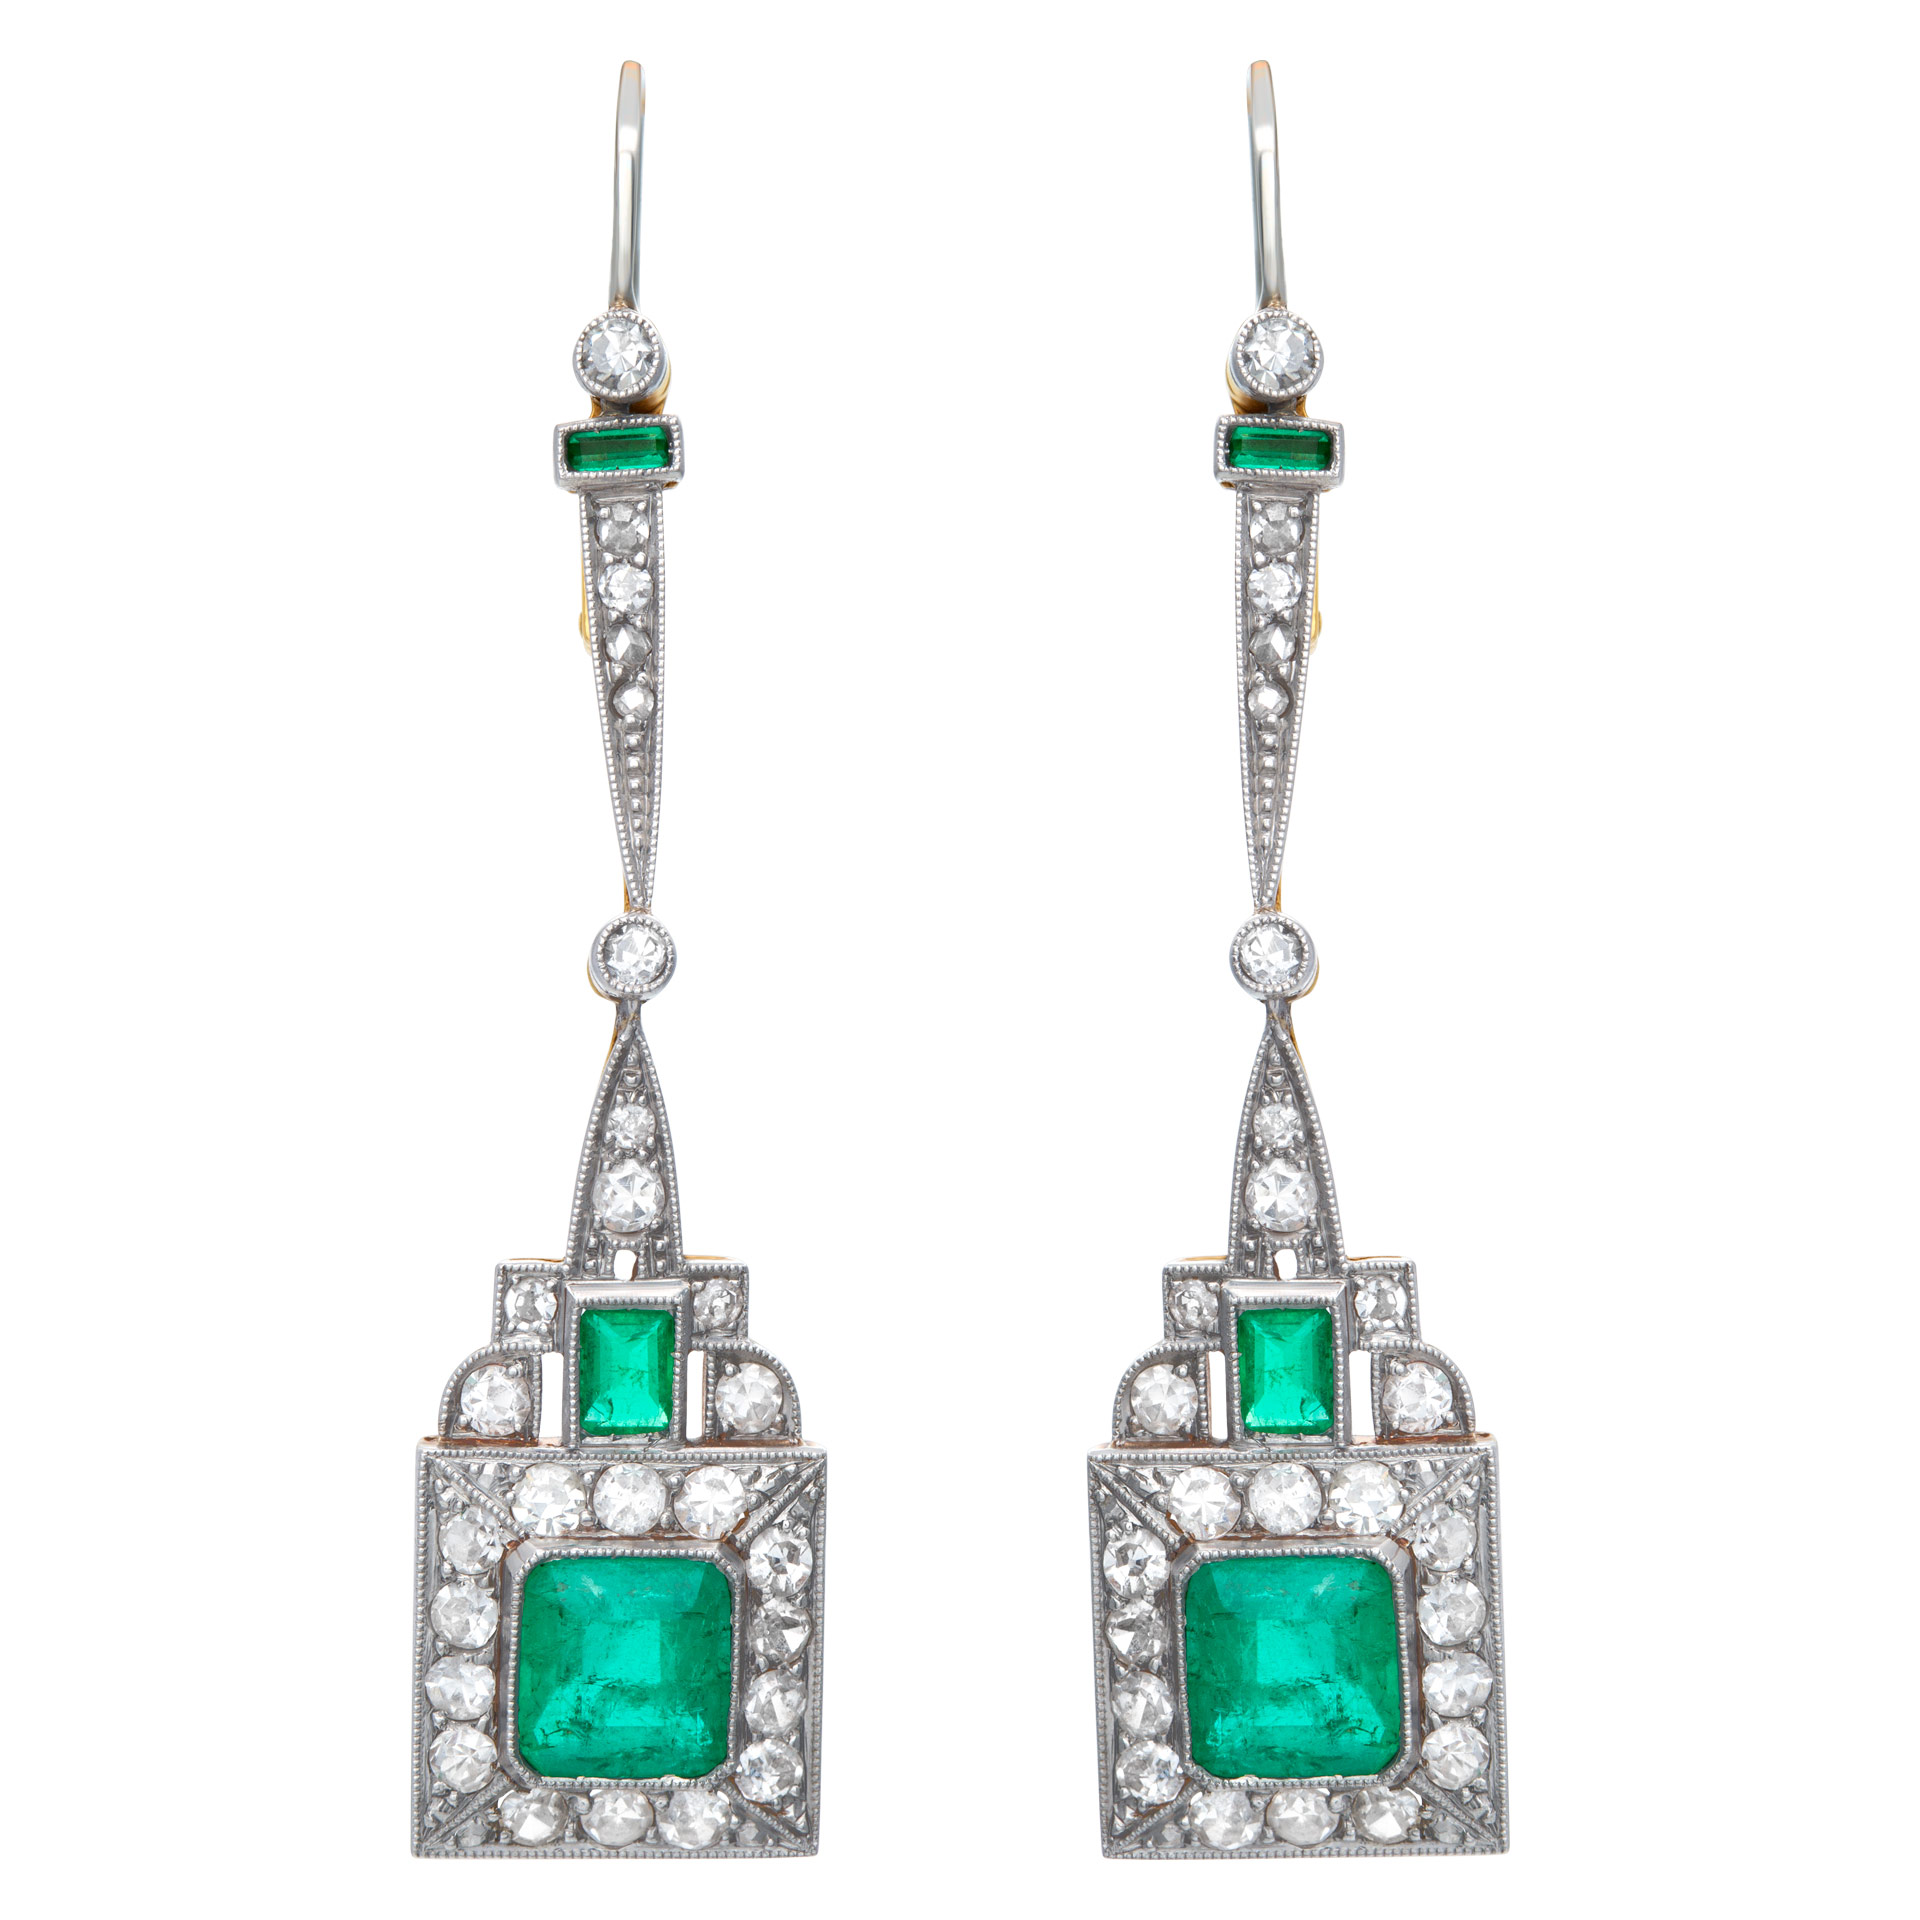 Vintage dangling emerald & diamonds earrings set in 18K yellow & white gold (Stones)